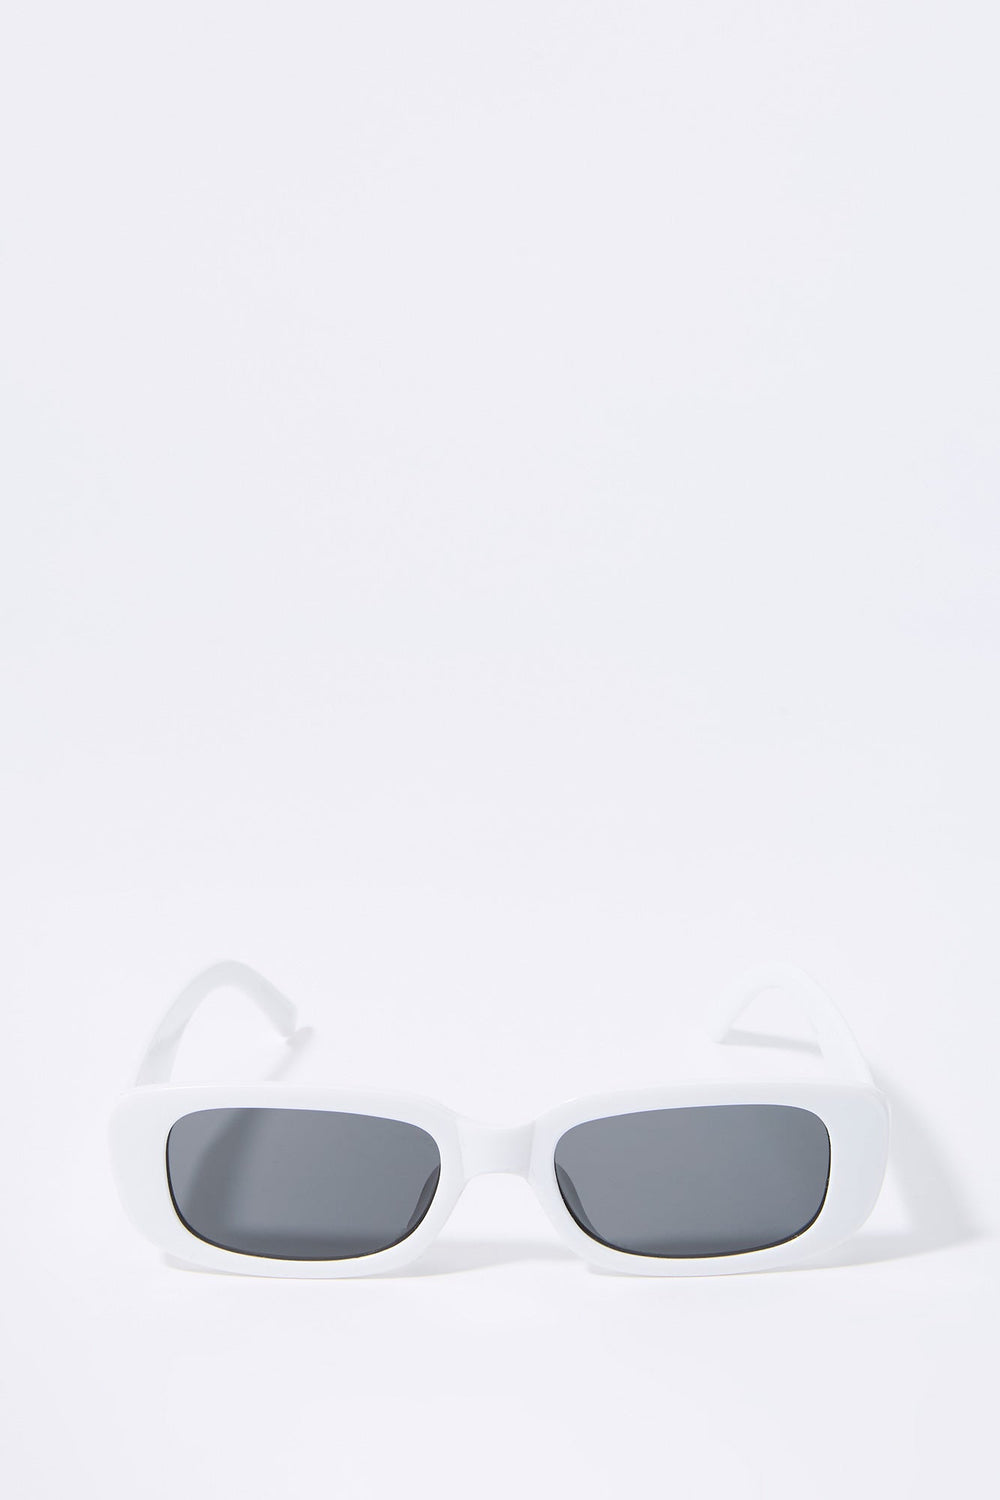 White Rectangle Sunglasses White Rectangle Sunglasses 1